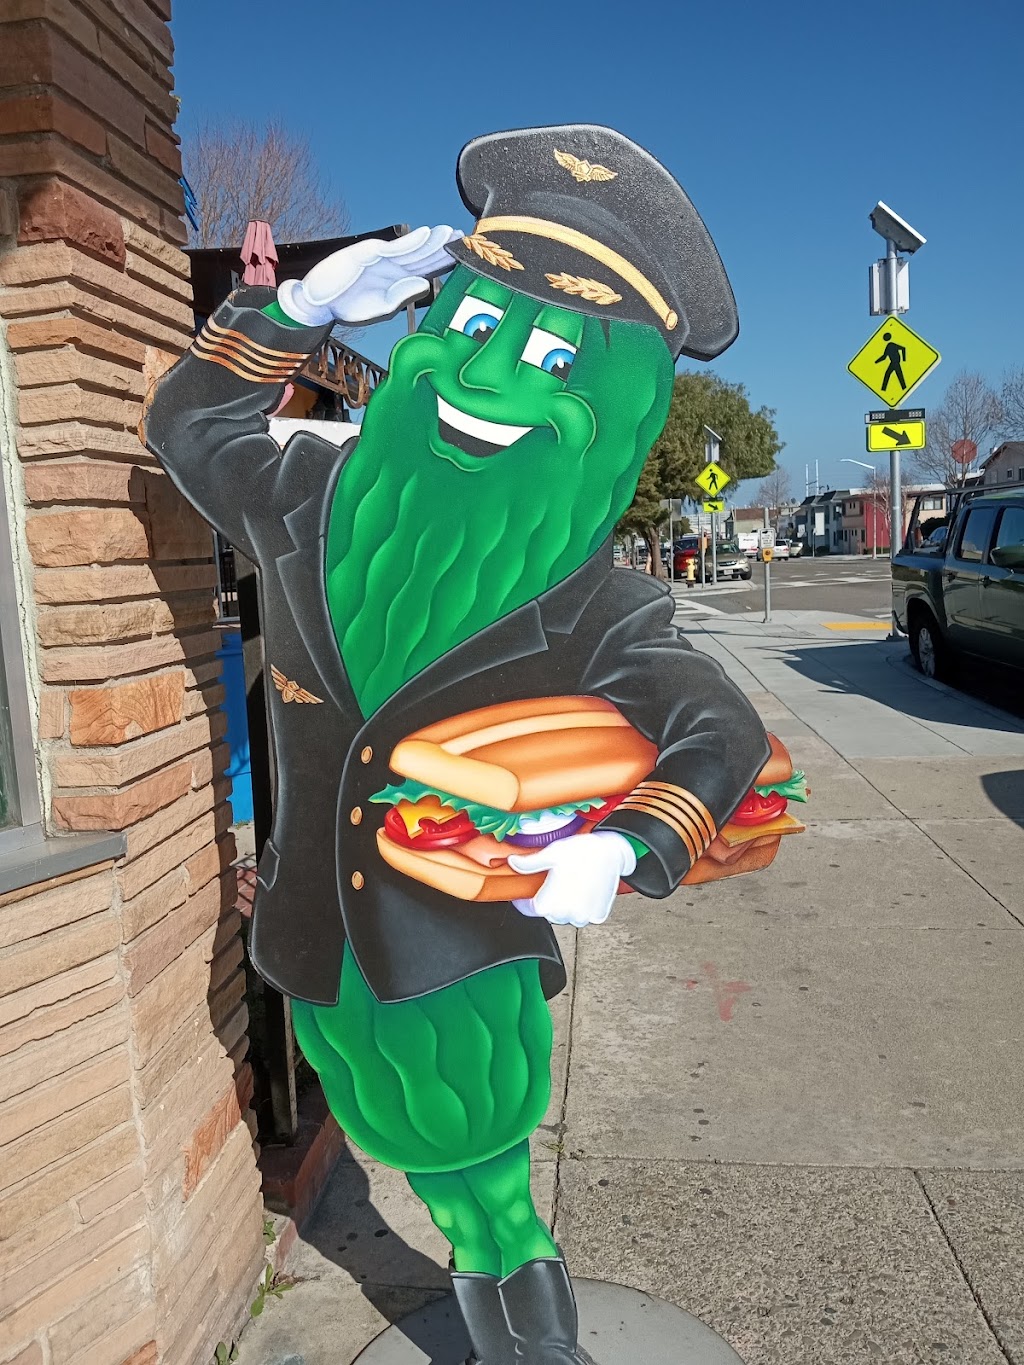 Mr. Pickle’s Sandwich Shop | San Bruno | 428 San Bruno Ave W, San Bruno, CA 94066 | Phone: (650) 615-9985